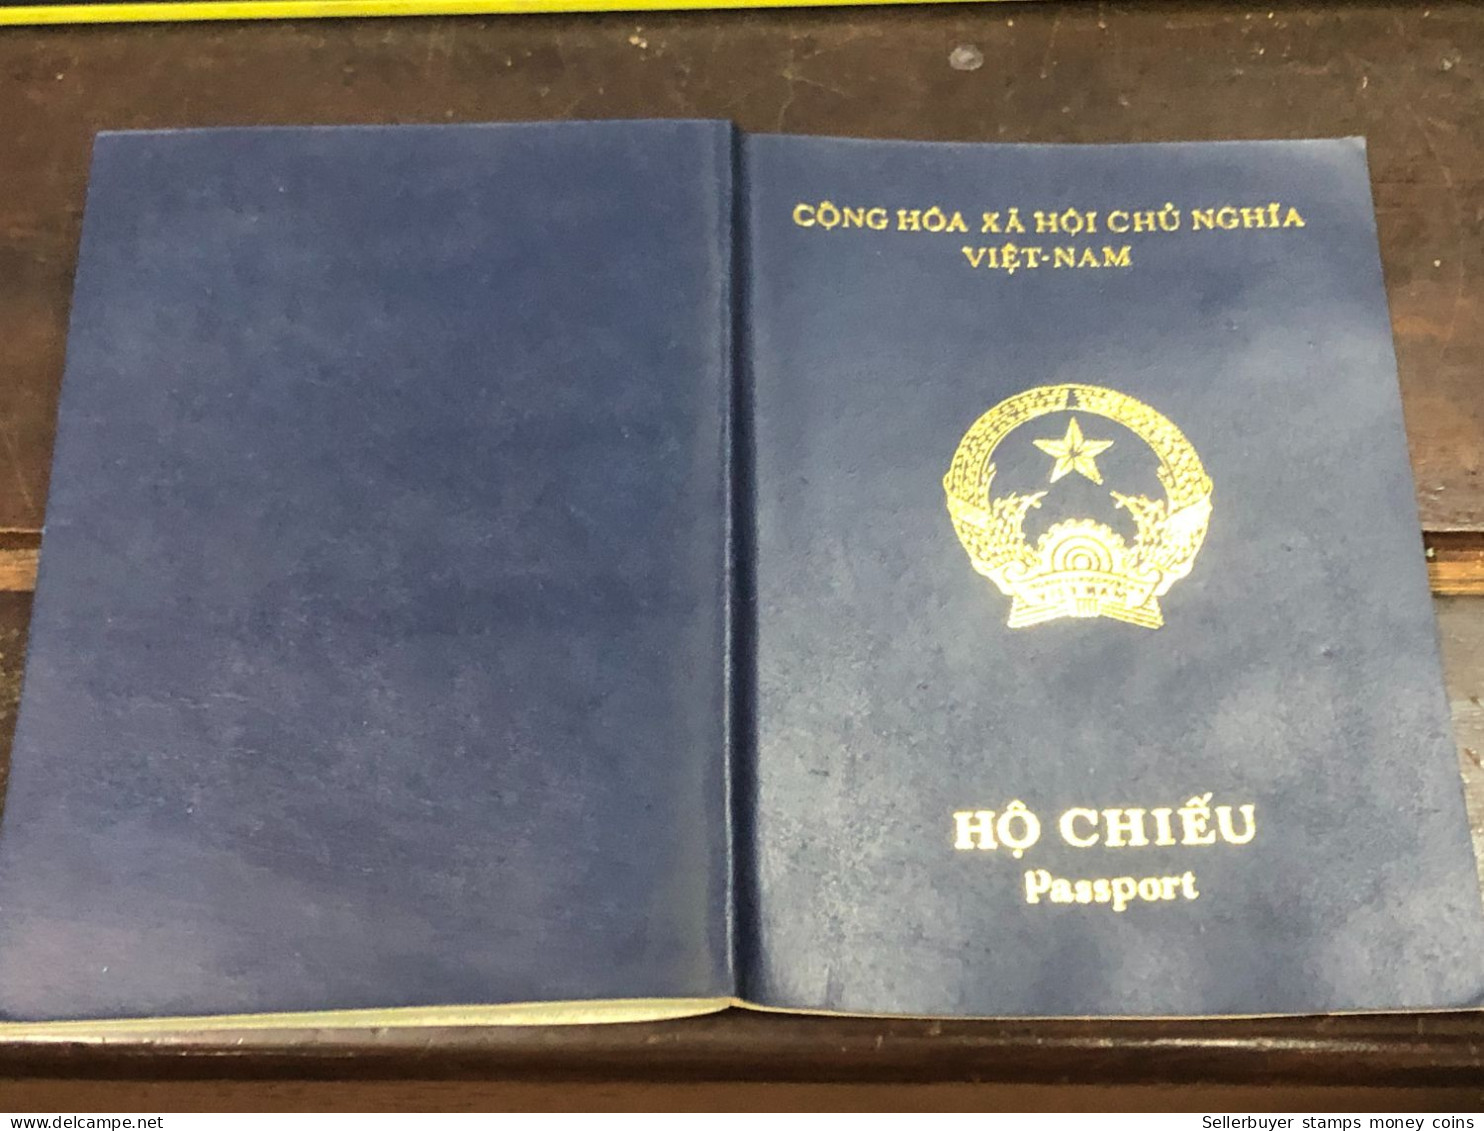 VIET NAM -OLD-ID PASSPORT-name-NGUYEN VAN SI-2001-1pcs Book - Collections